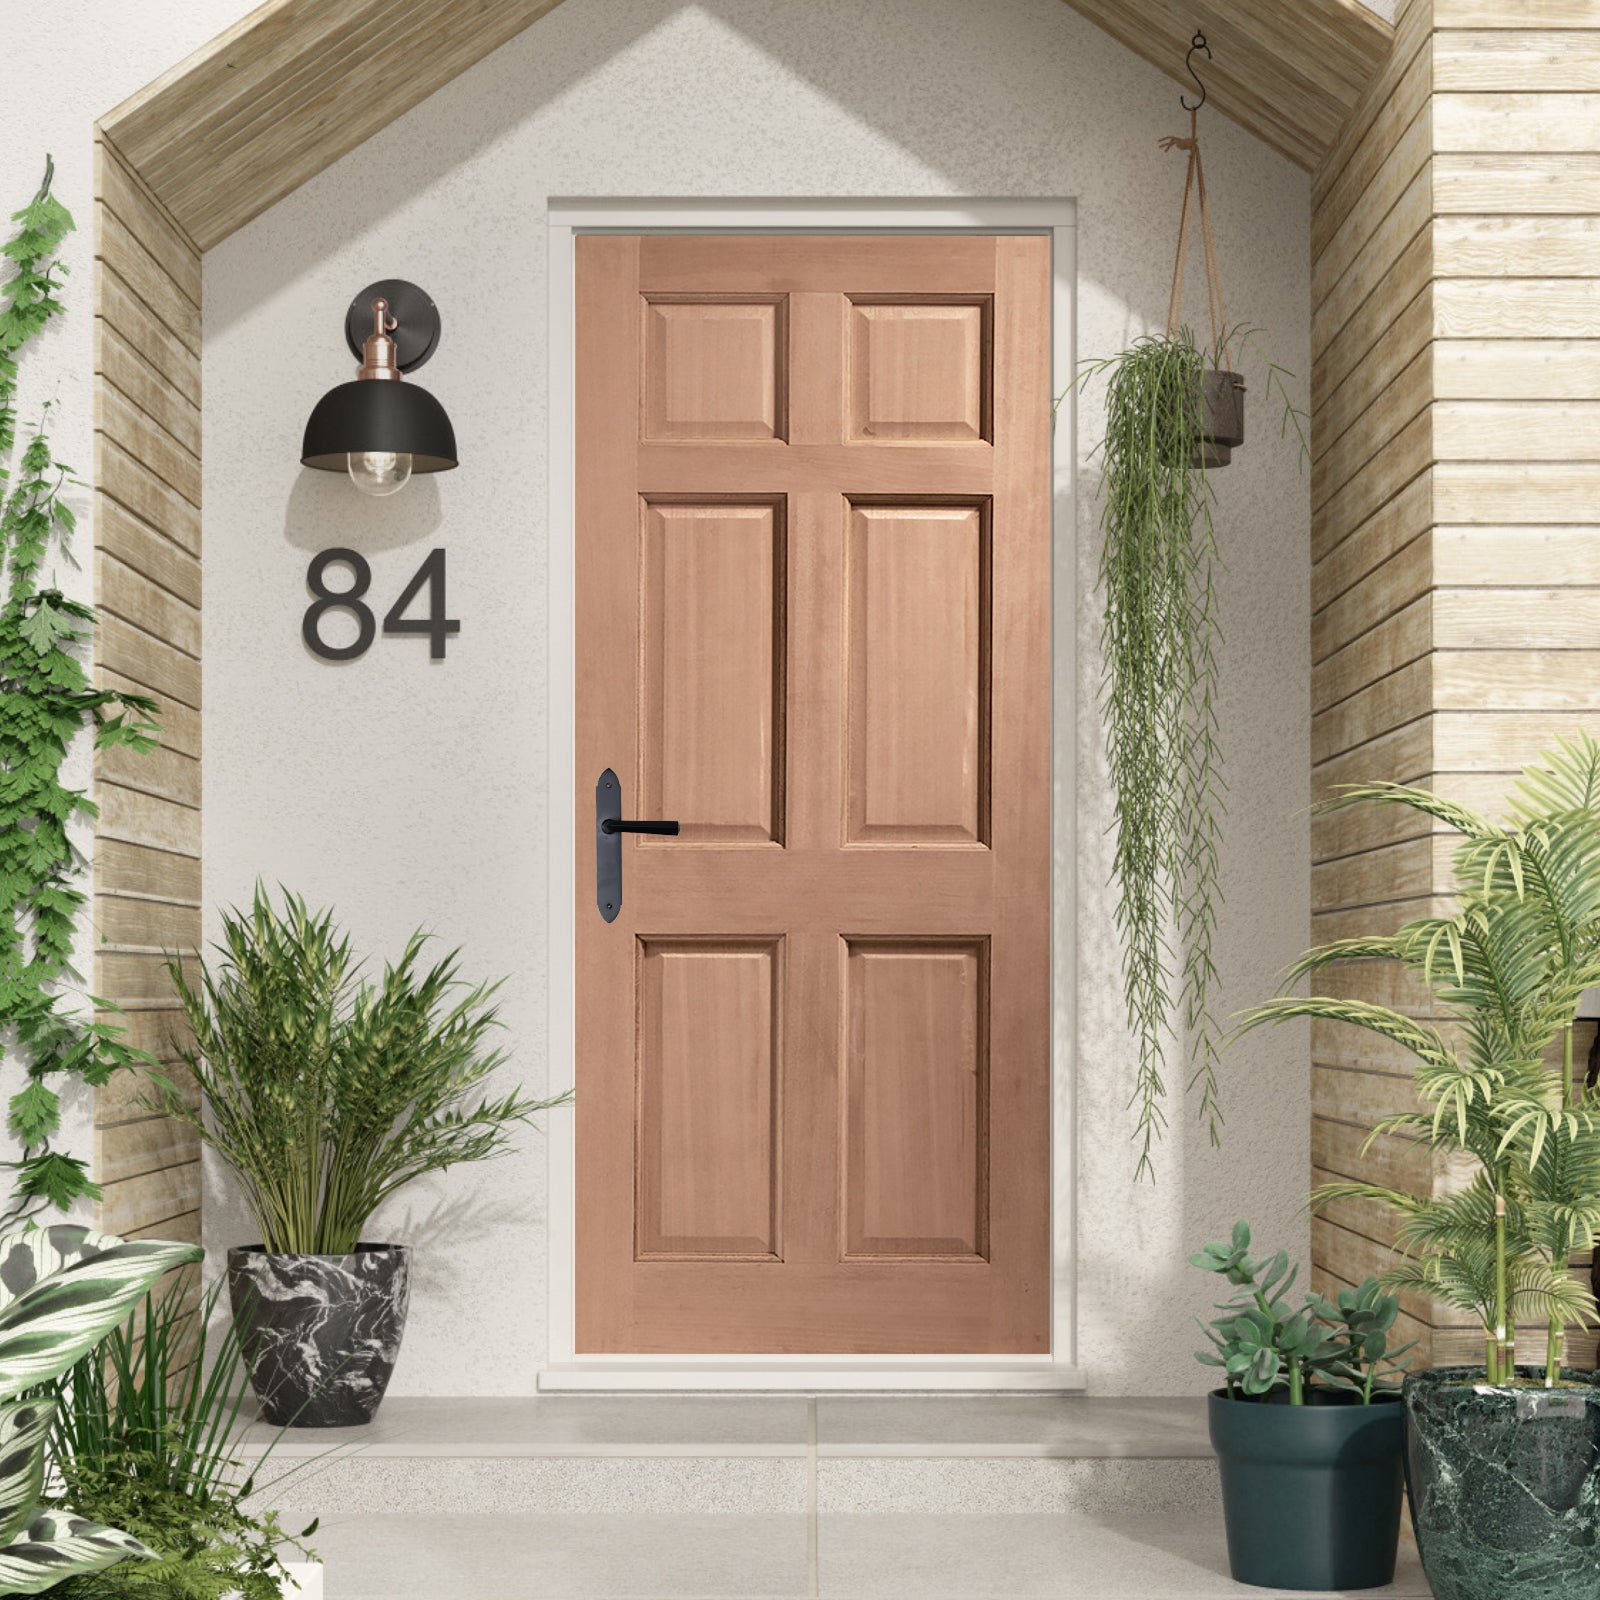 SHOW External Hardwood Colonial 6 Panel Door lifestyle